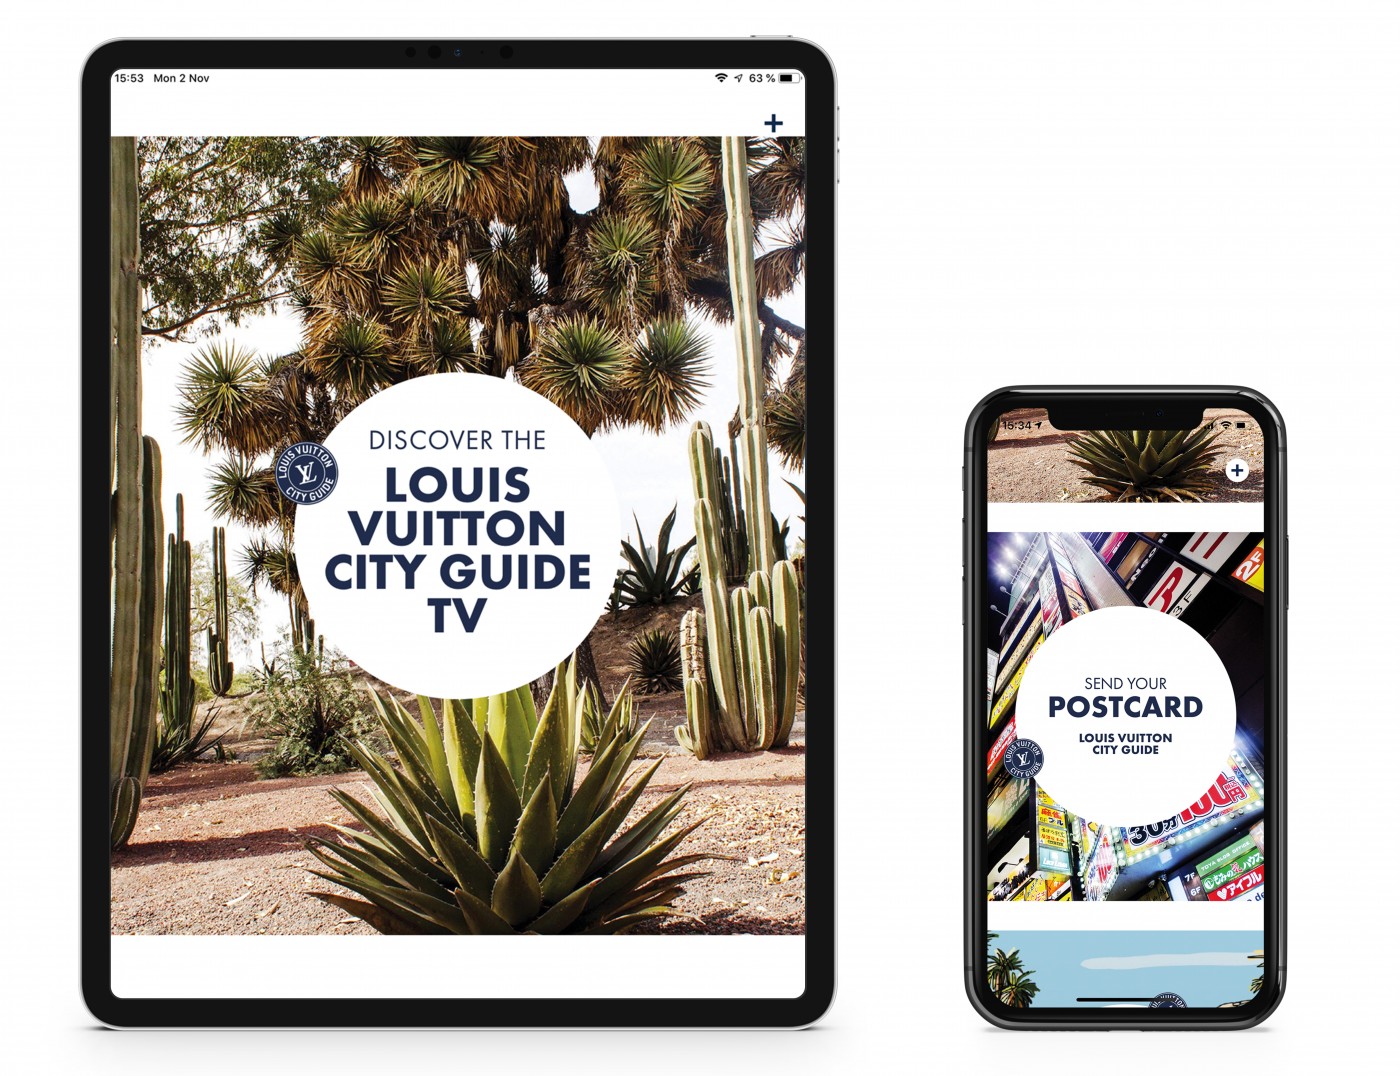 Louis Vuitton: 100 Legendary Trunks iPad app is now available